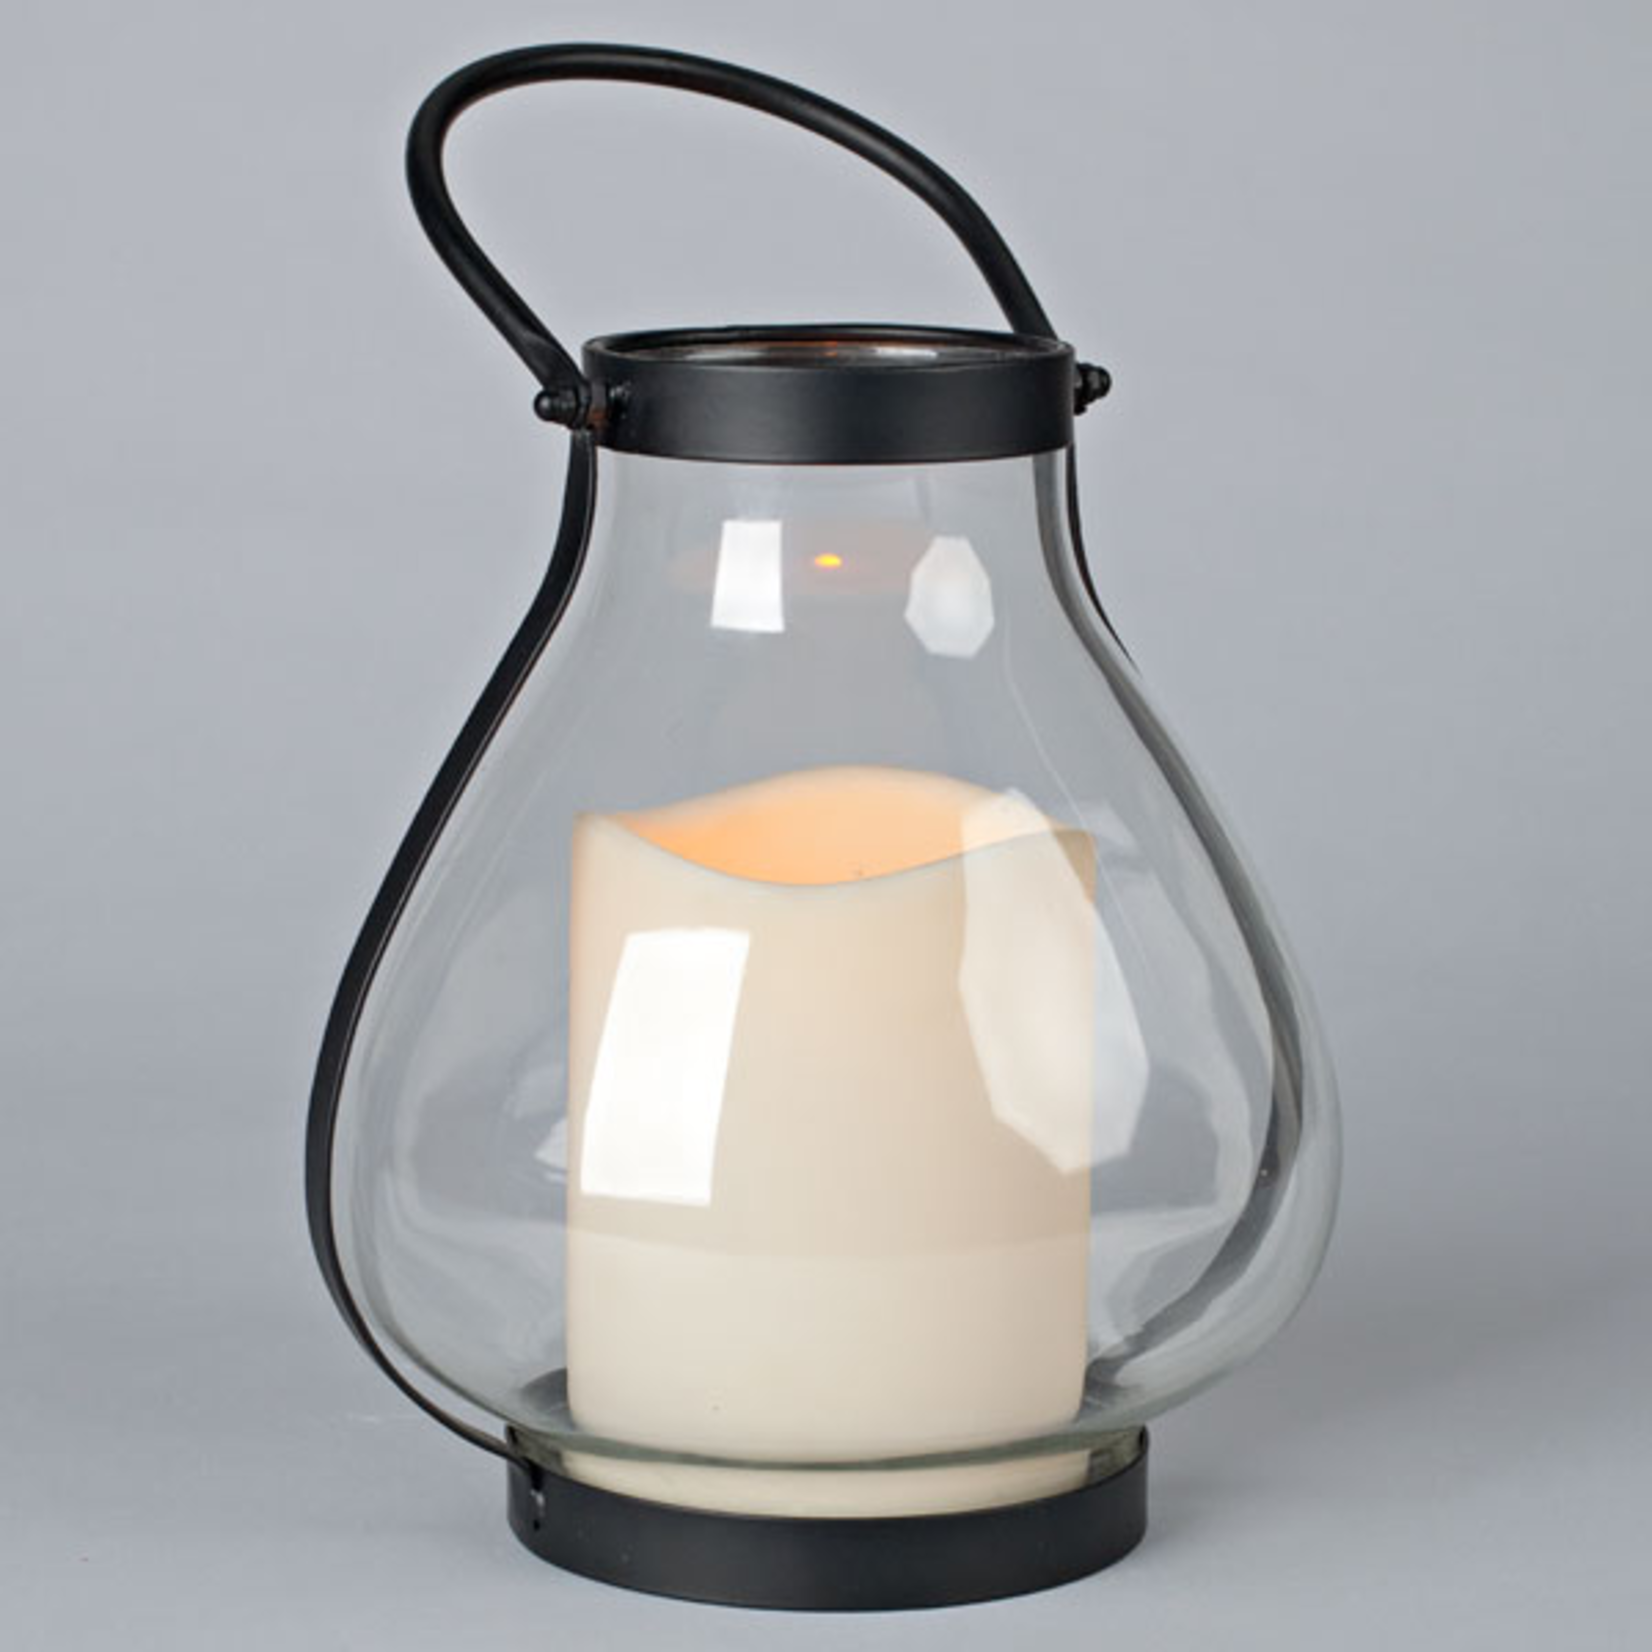 Gerson School House Lantern